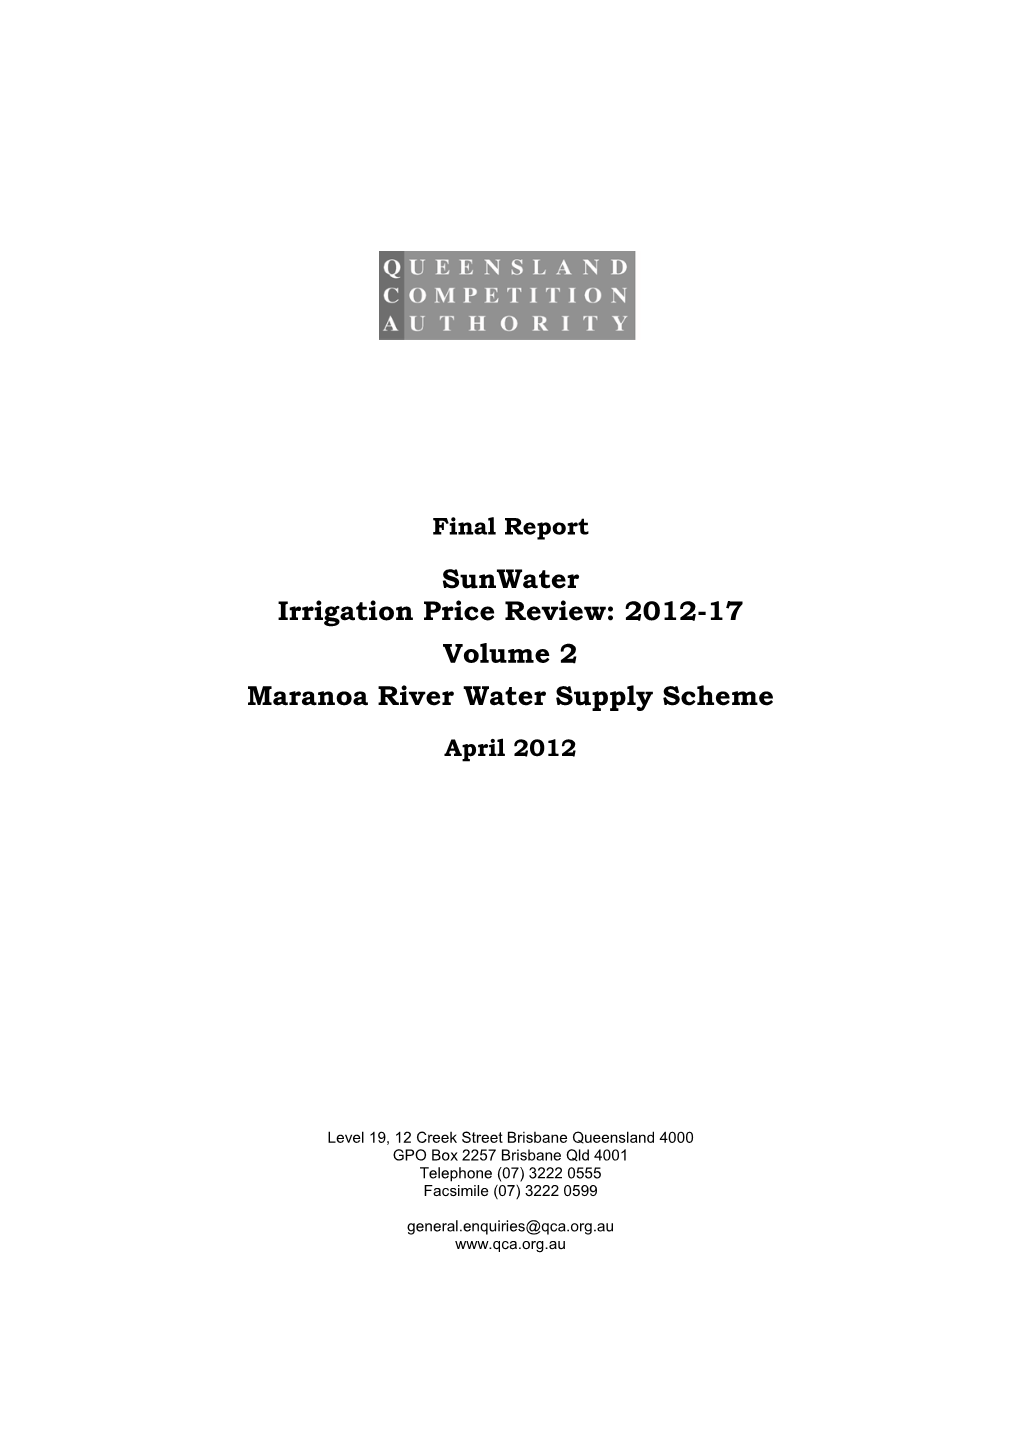 Sunwater Irrigation Price Review: 2012-17 Volume 2 Maranoa River Water Supply Scheme